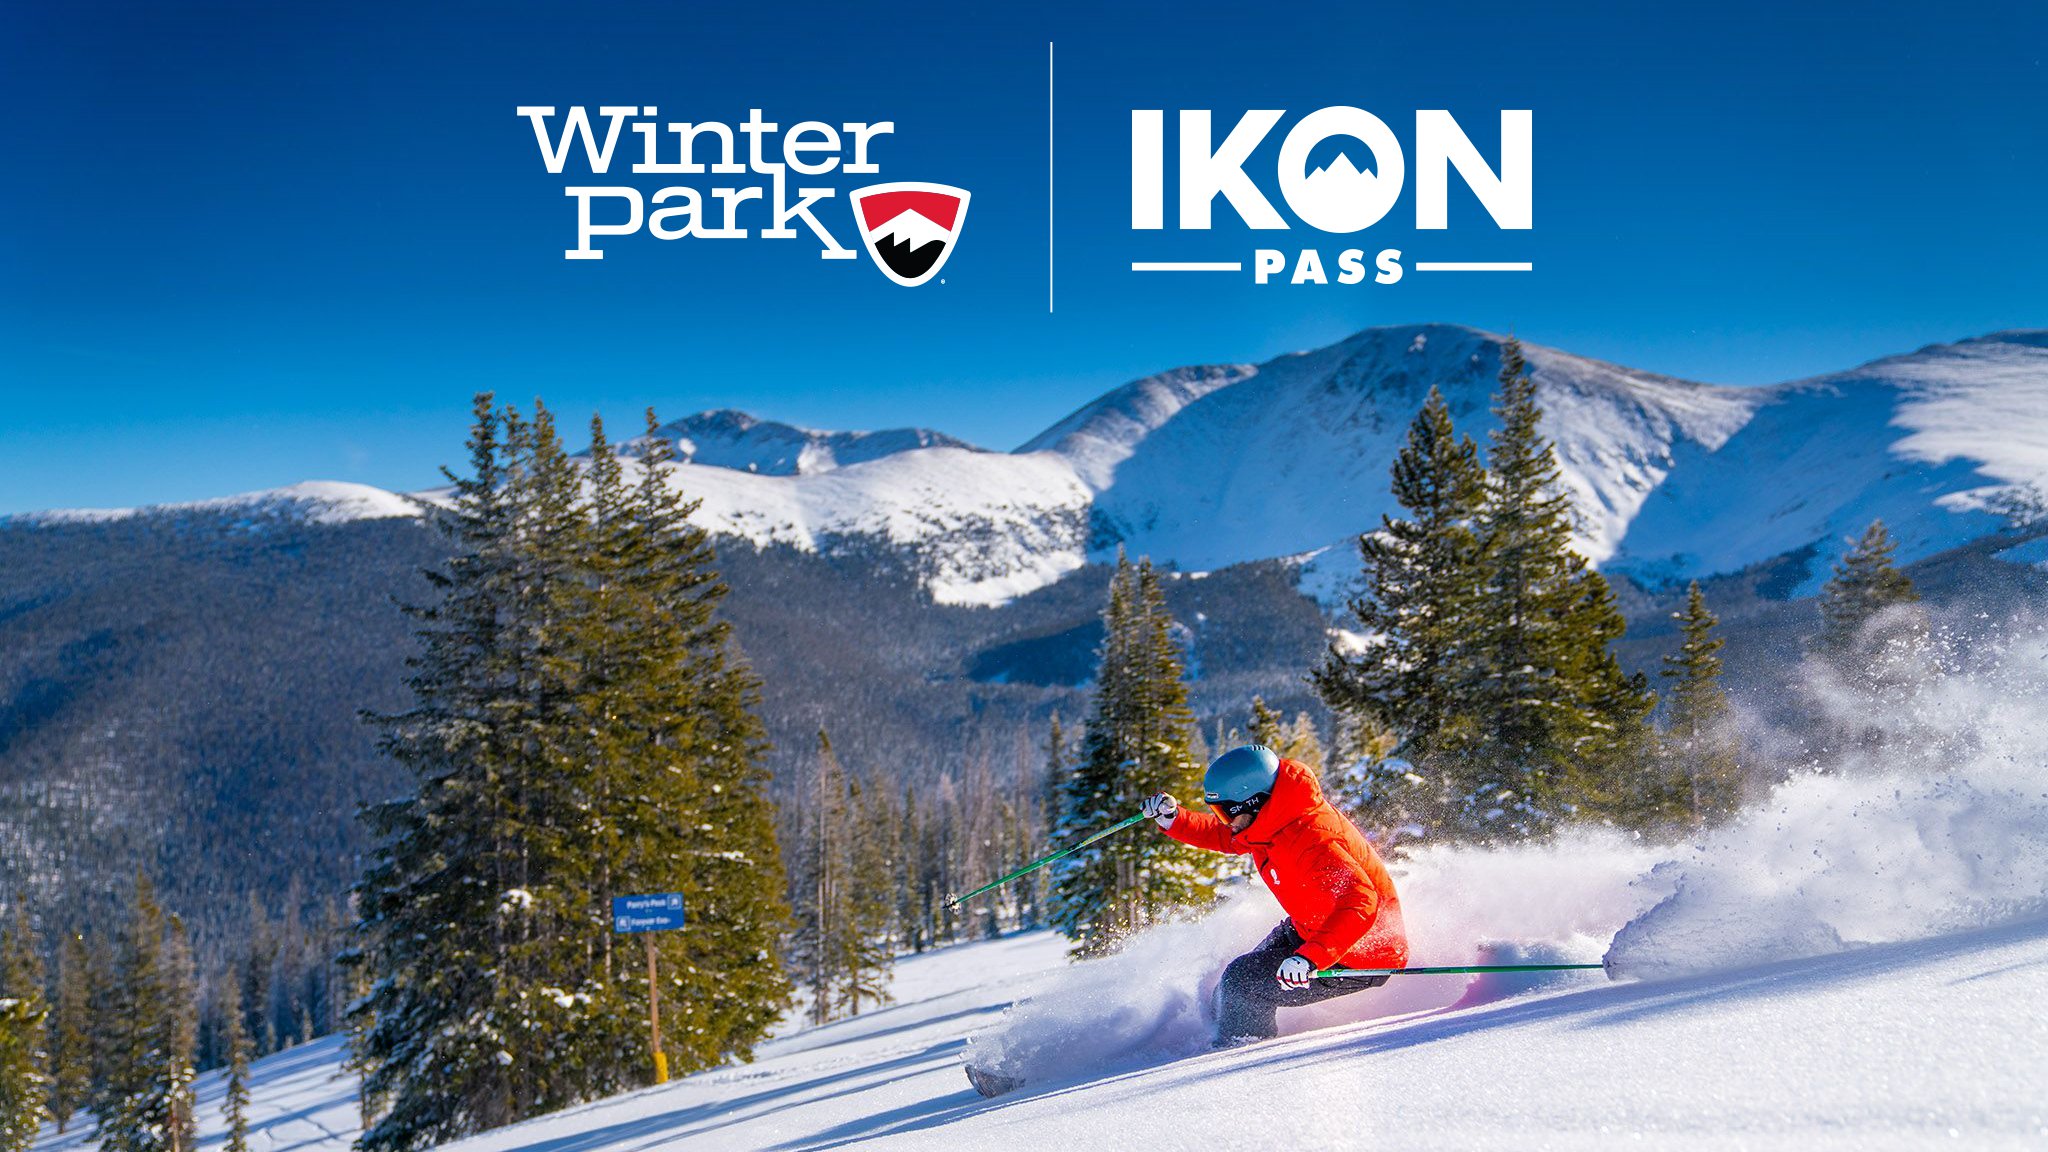 Winter Park Season Passes and Lift Tickets